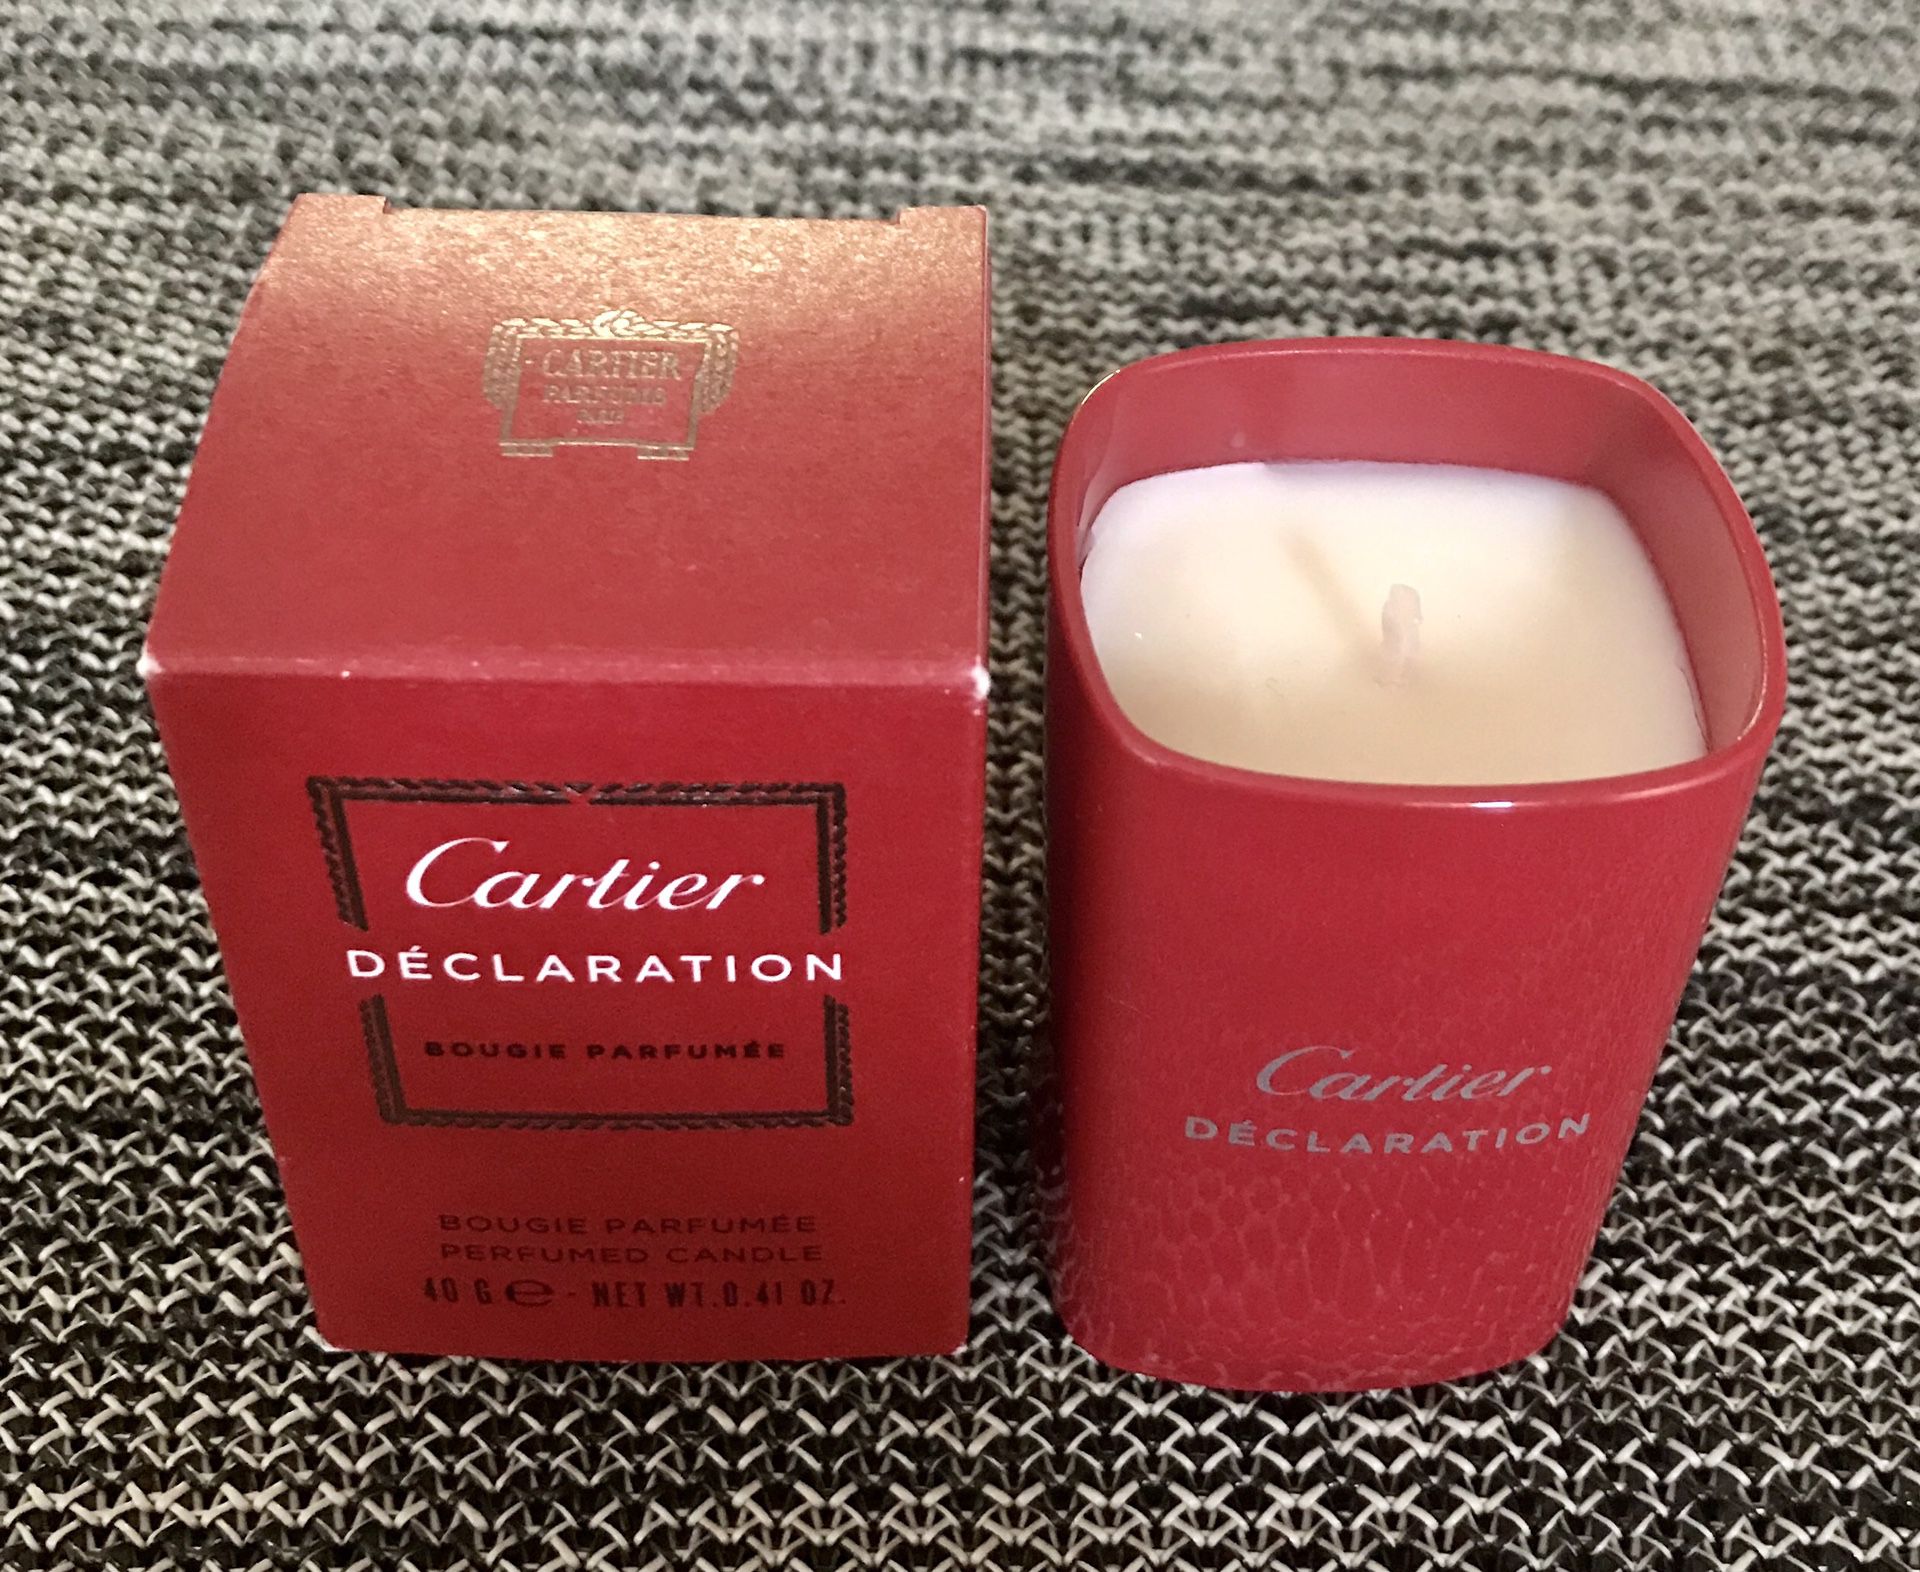 Cartier. DECLARATION candle